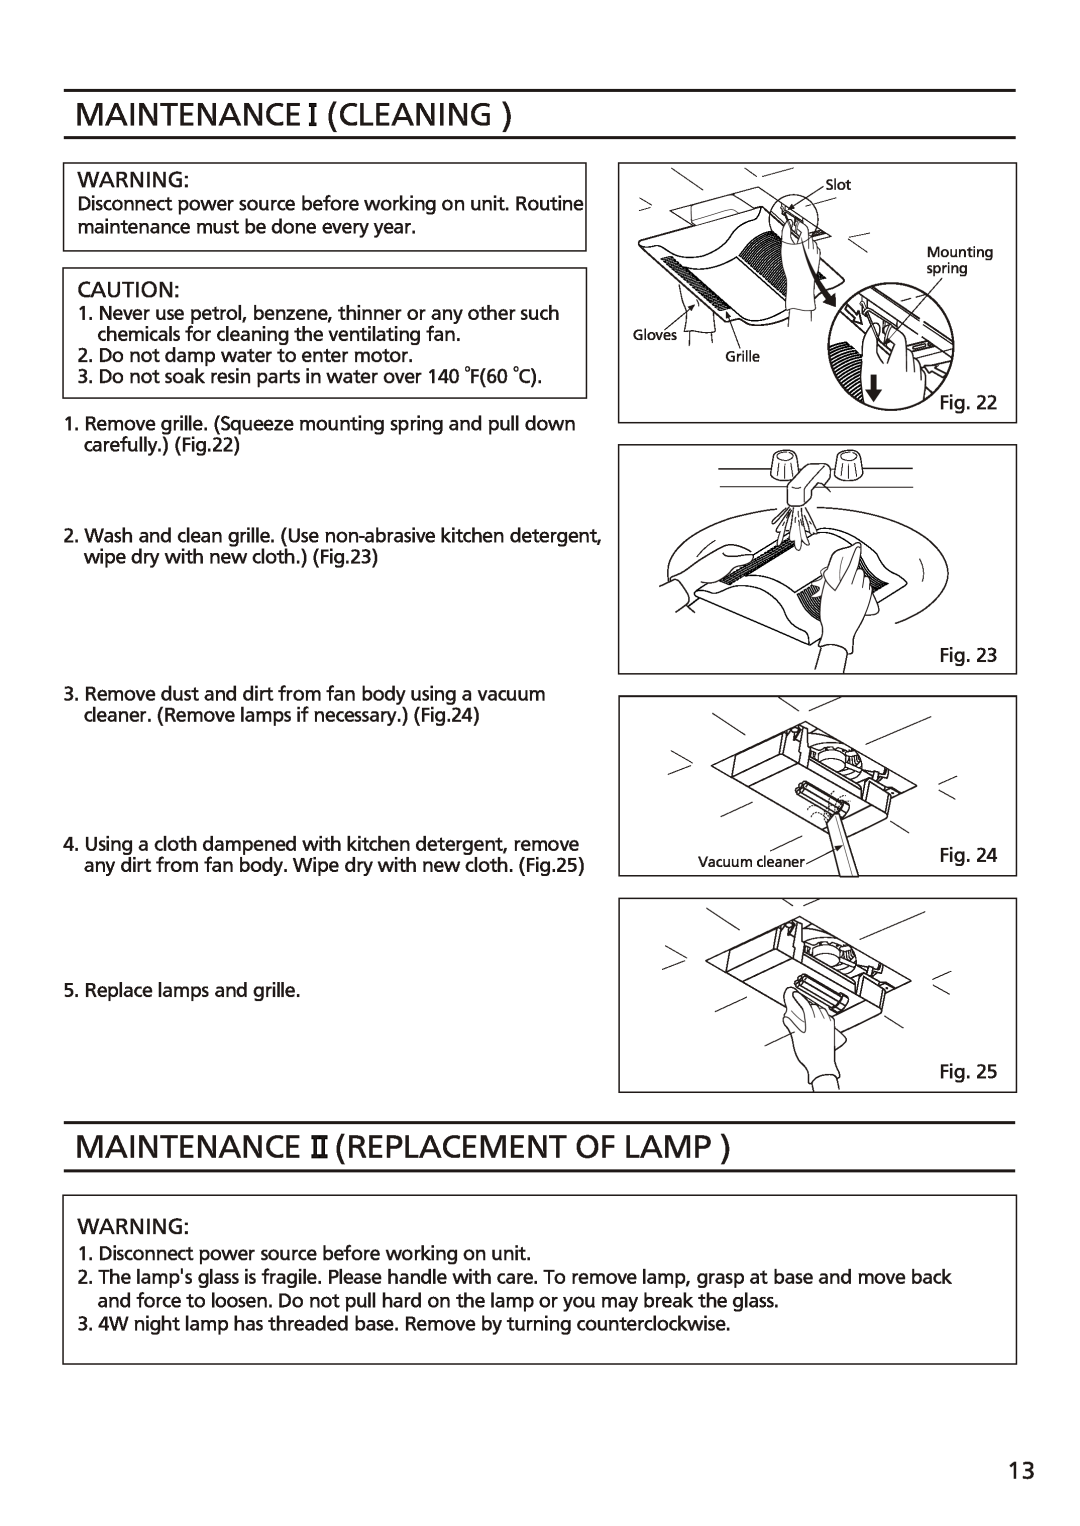 Panasonic FV-08vsl2 installation instructions Maintenance Cleaning, Maintenance Replacement Of Lamp 